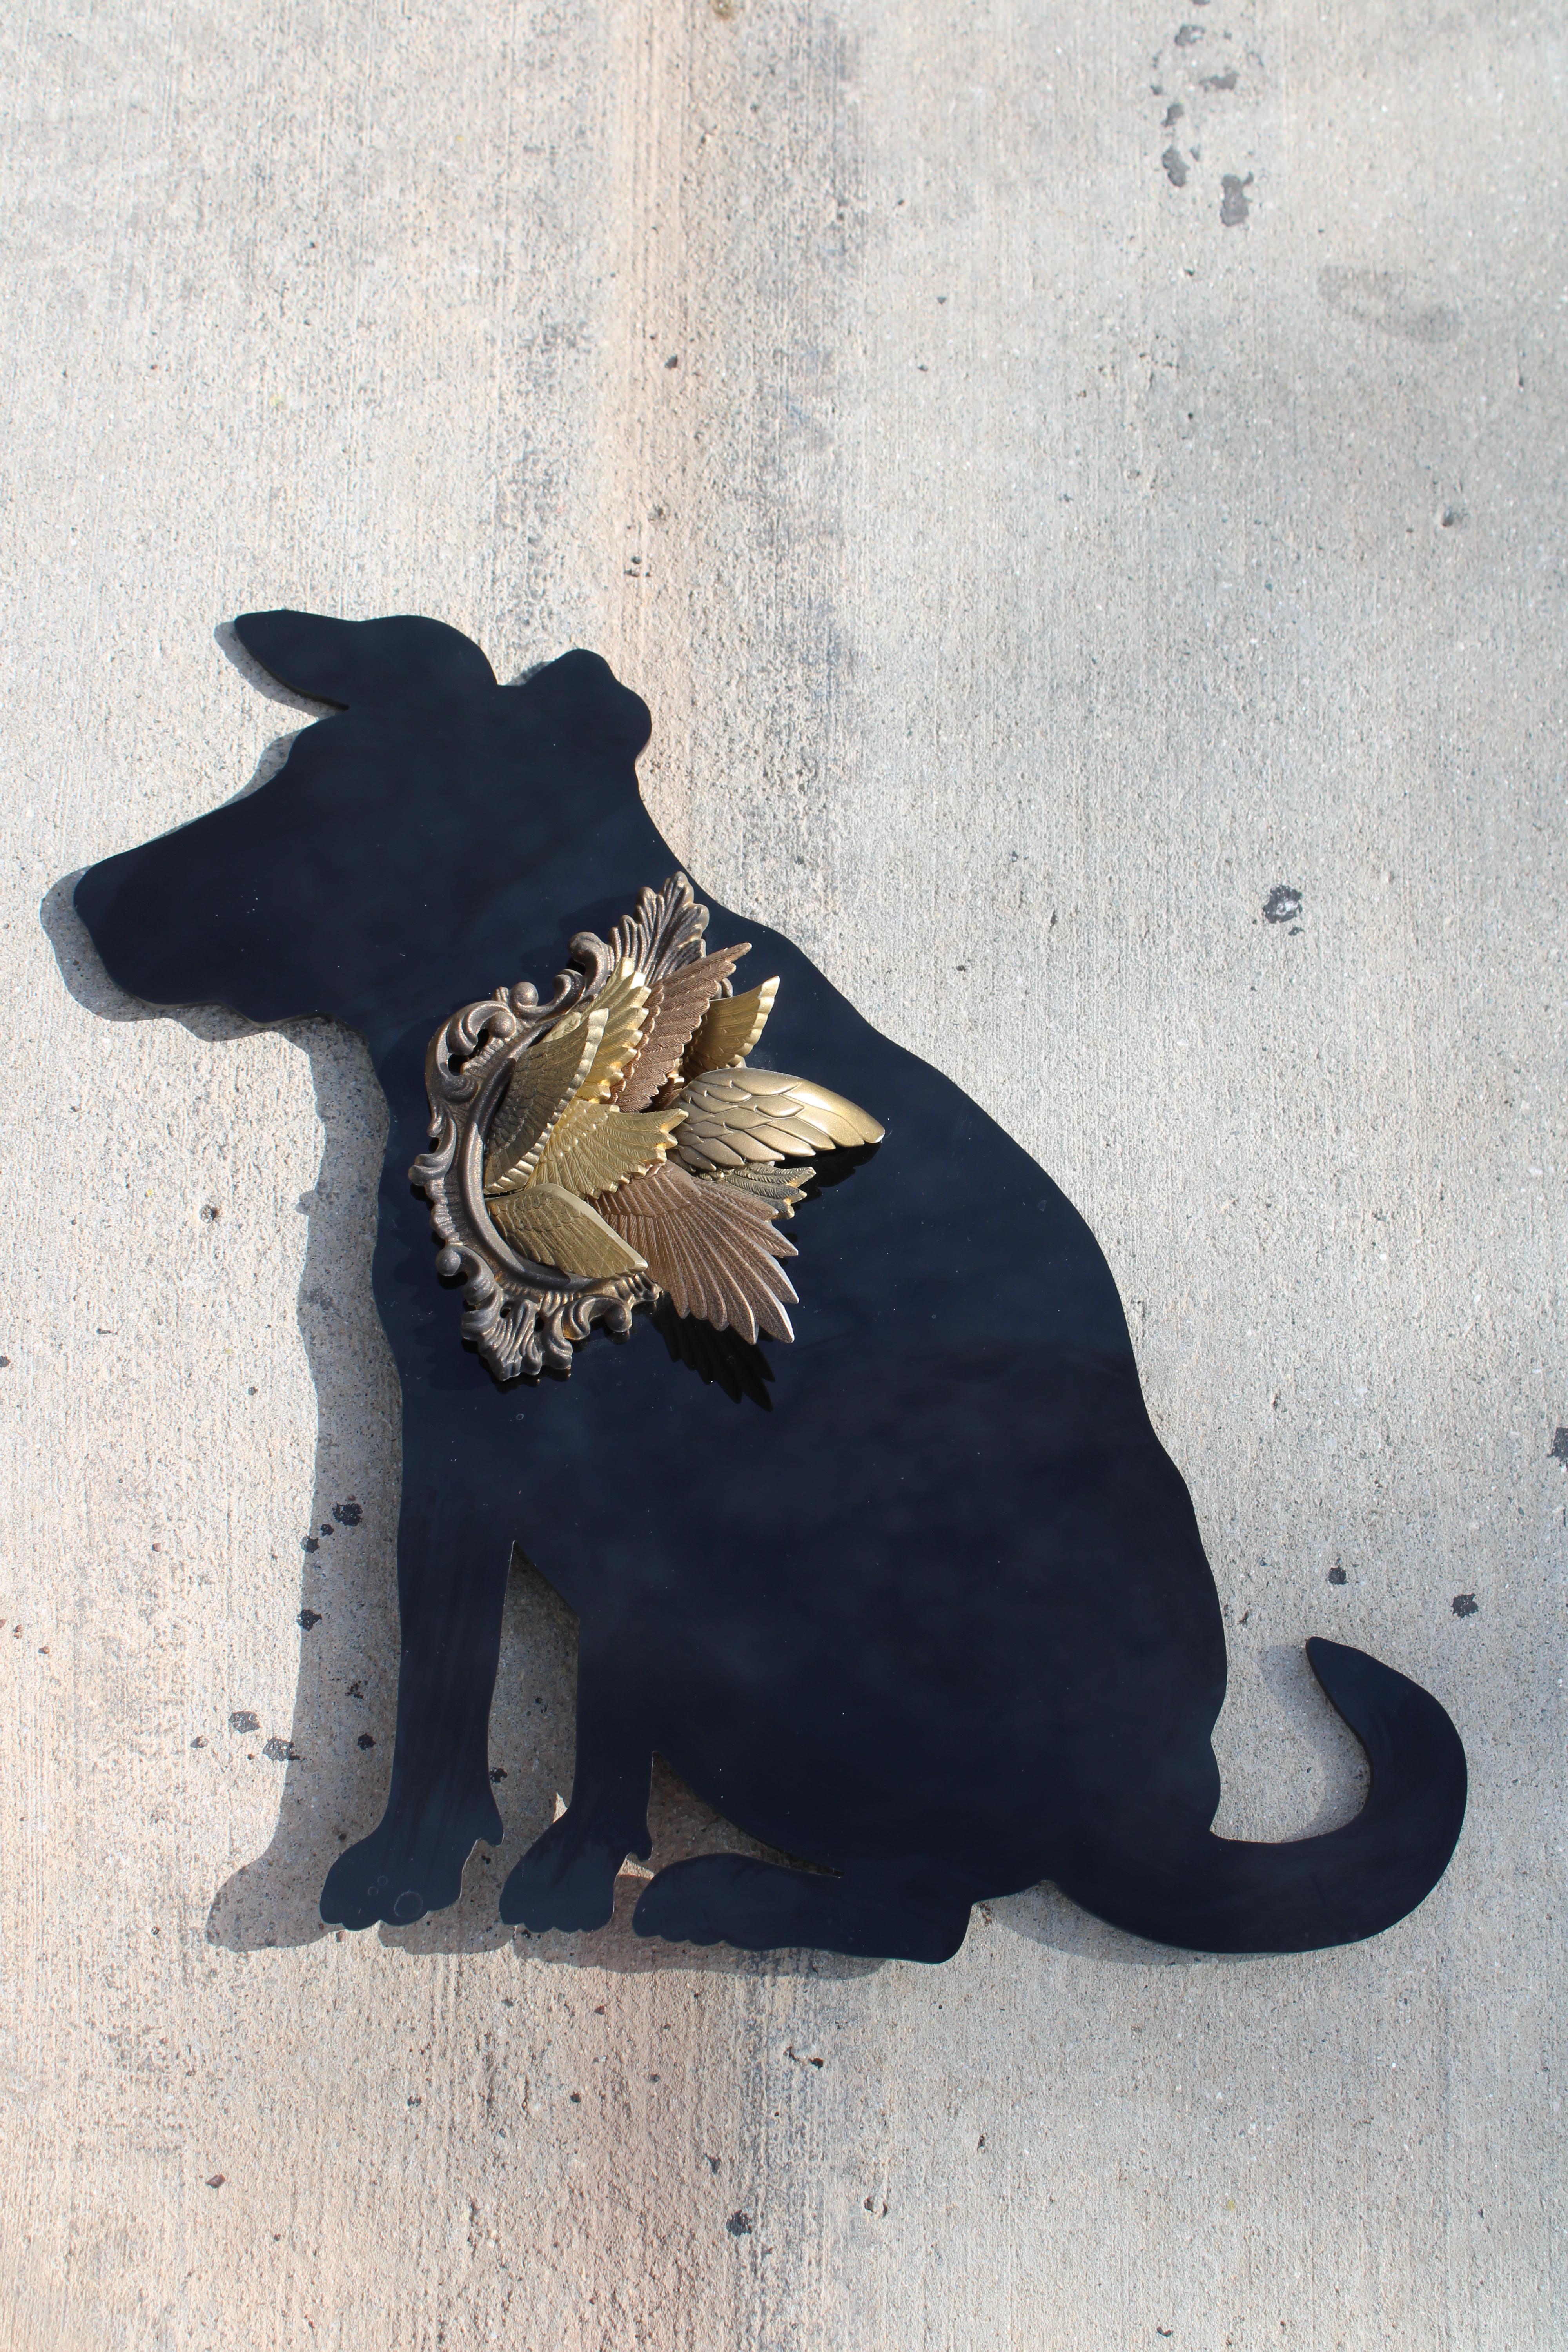 David Gilhooly acrylic dog wall sculpture, #6, titled 